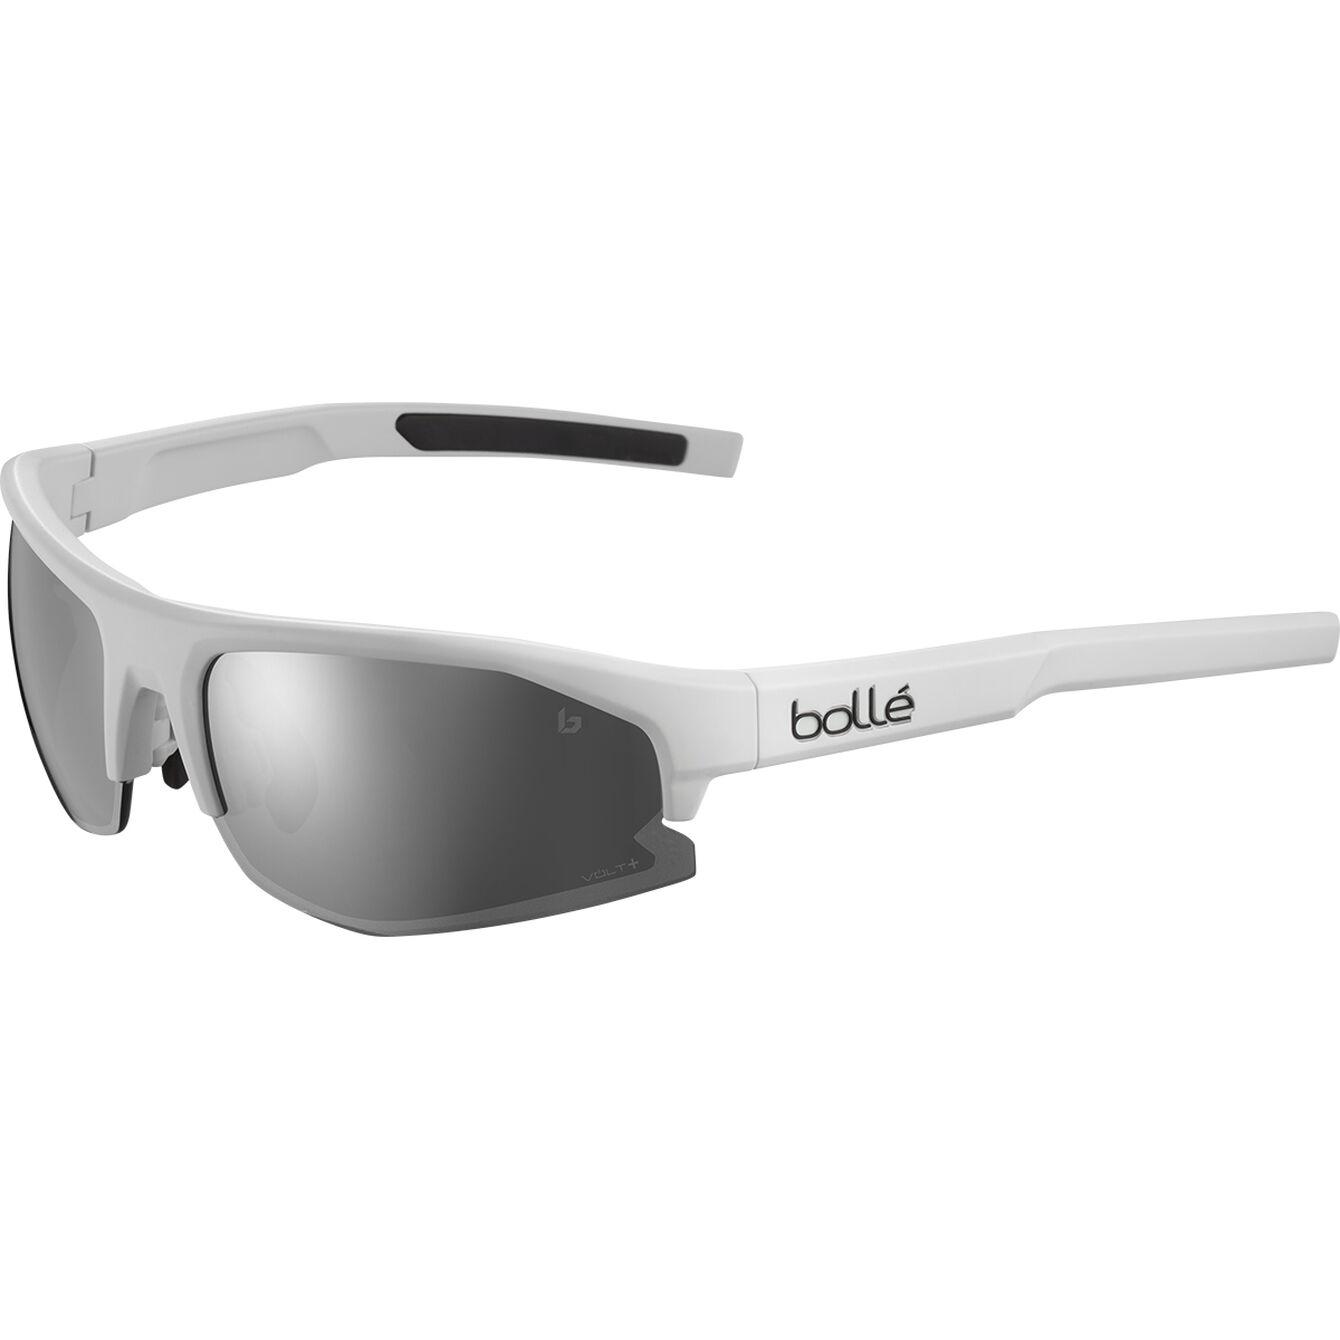 Bolle Bolt 2.0 S Offwhite Polarized Sunglasses  White/off White/matte